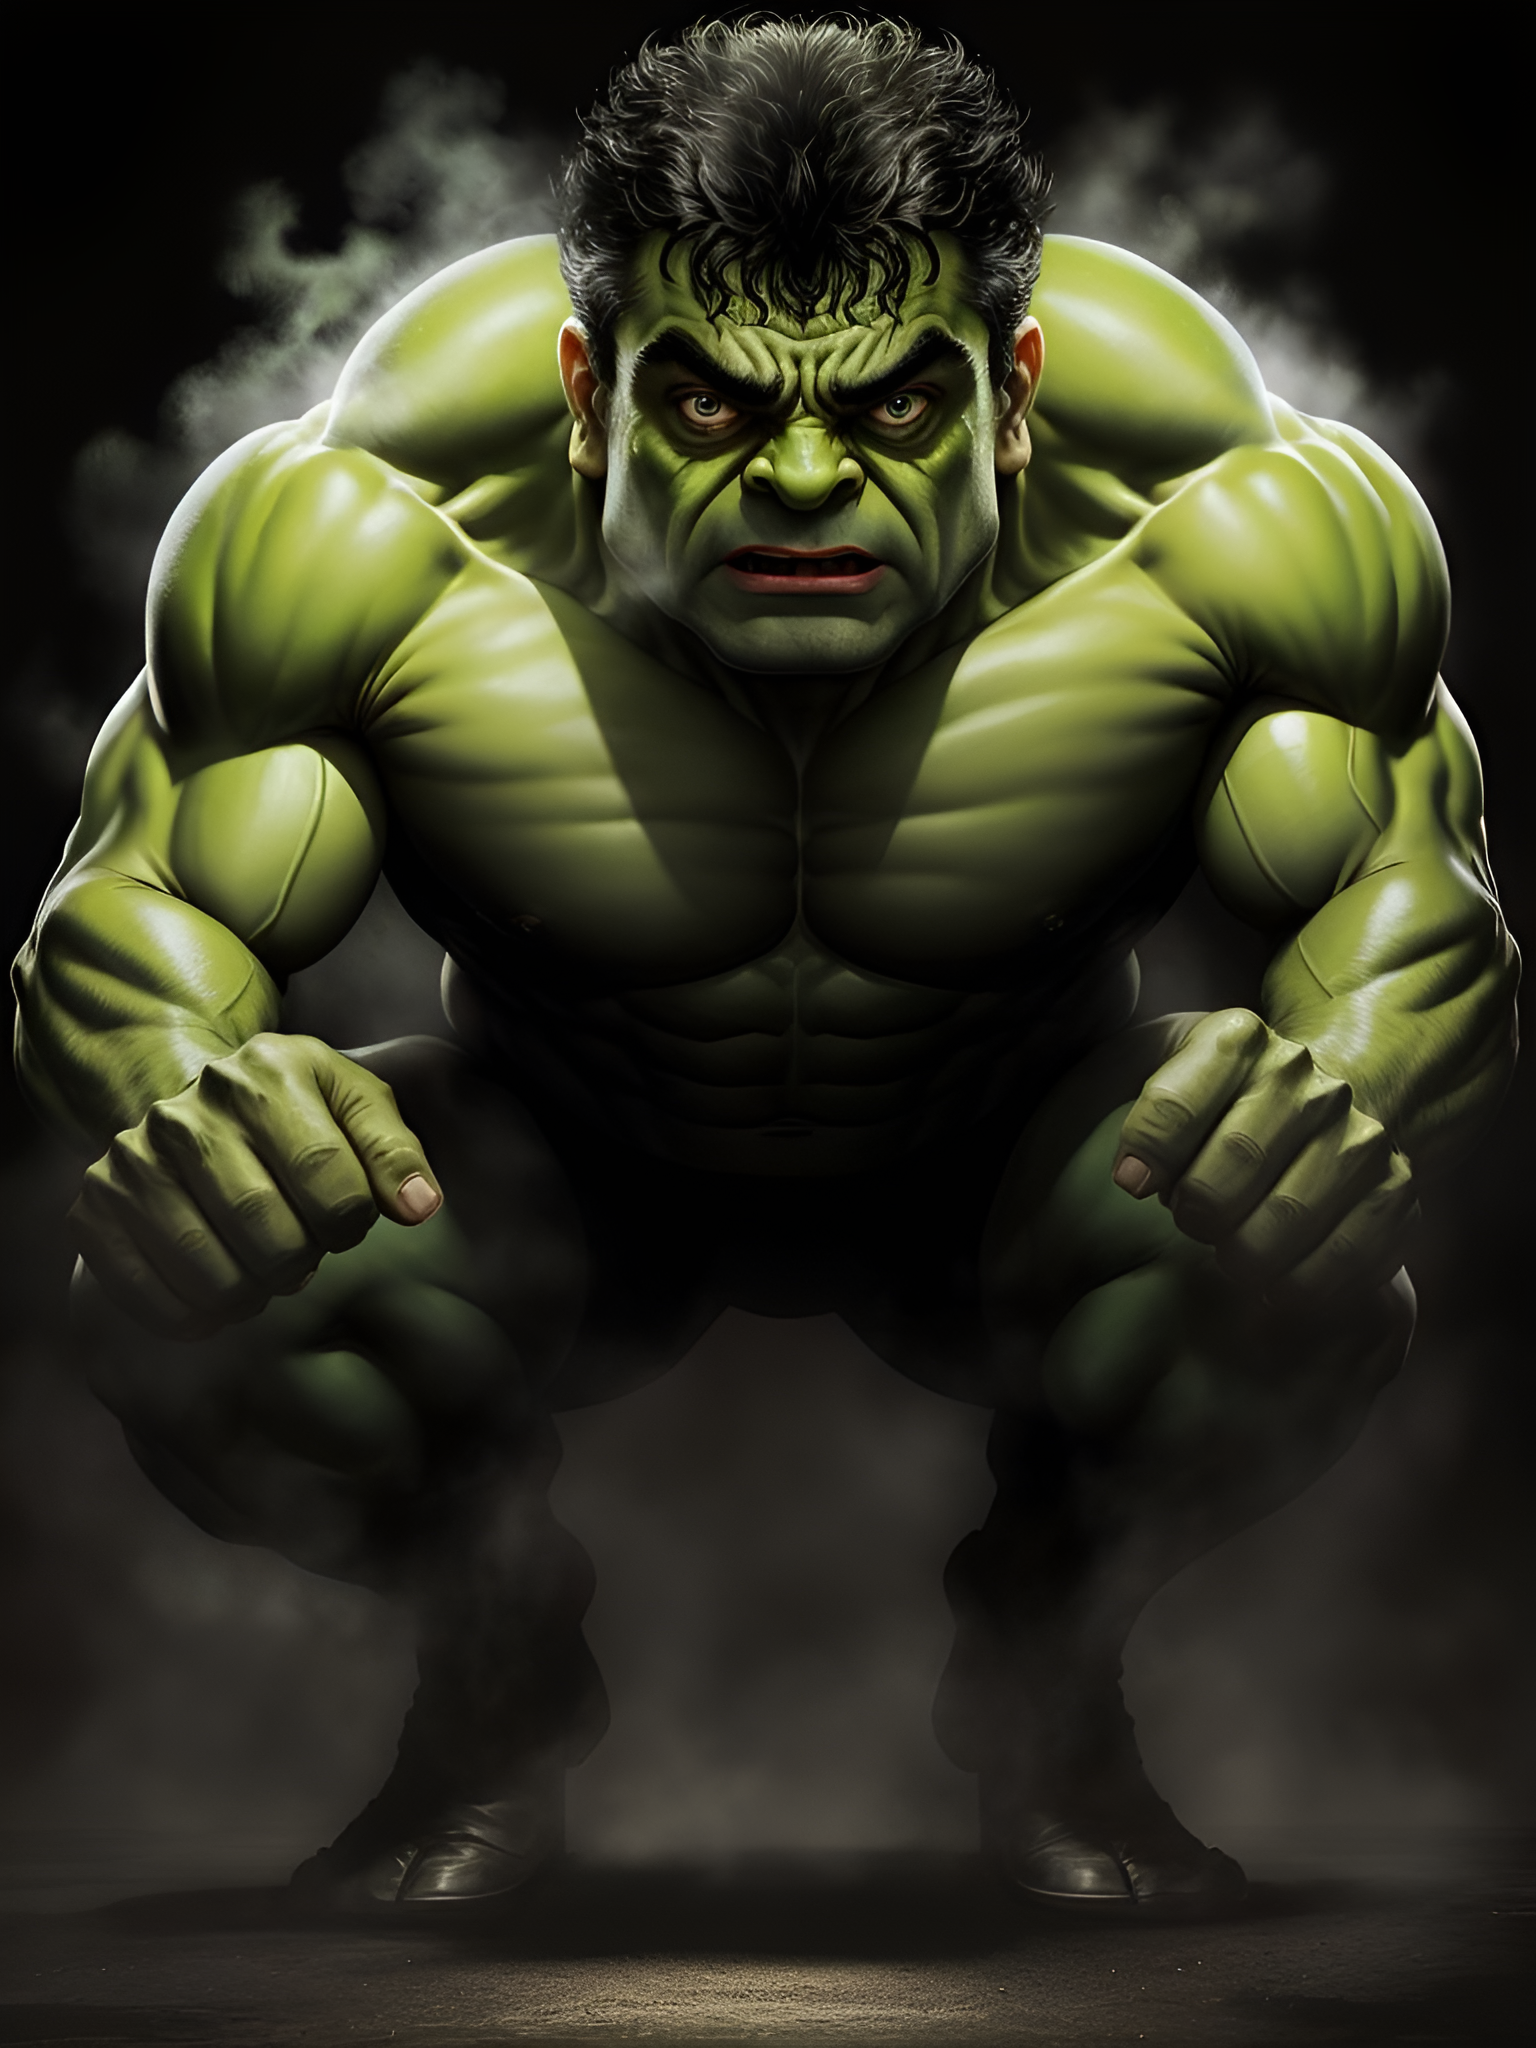 General 1536x2048 AI art Marvel Comics Rowan Atkinson Hulk portrait display muscles looking at viewer green hair superhero